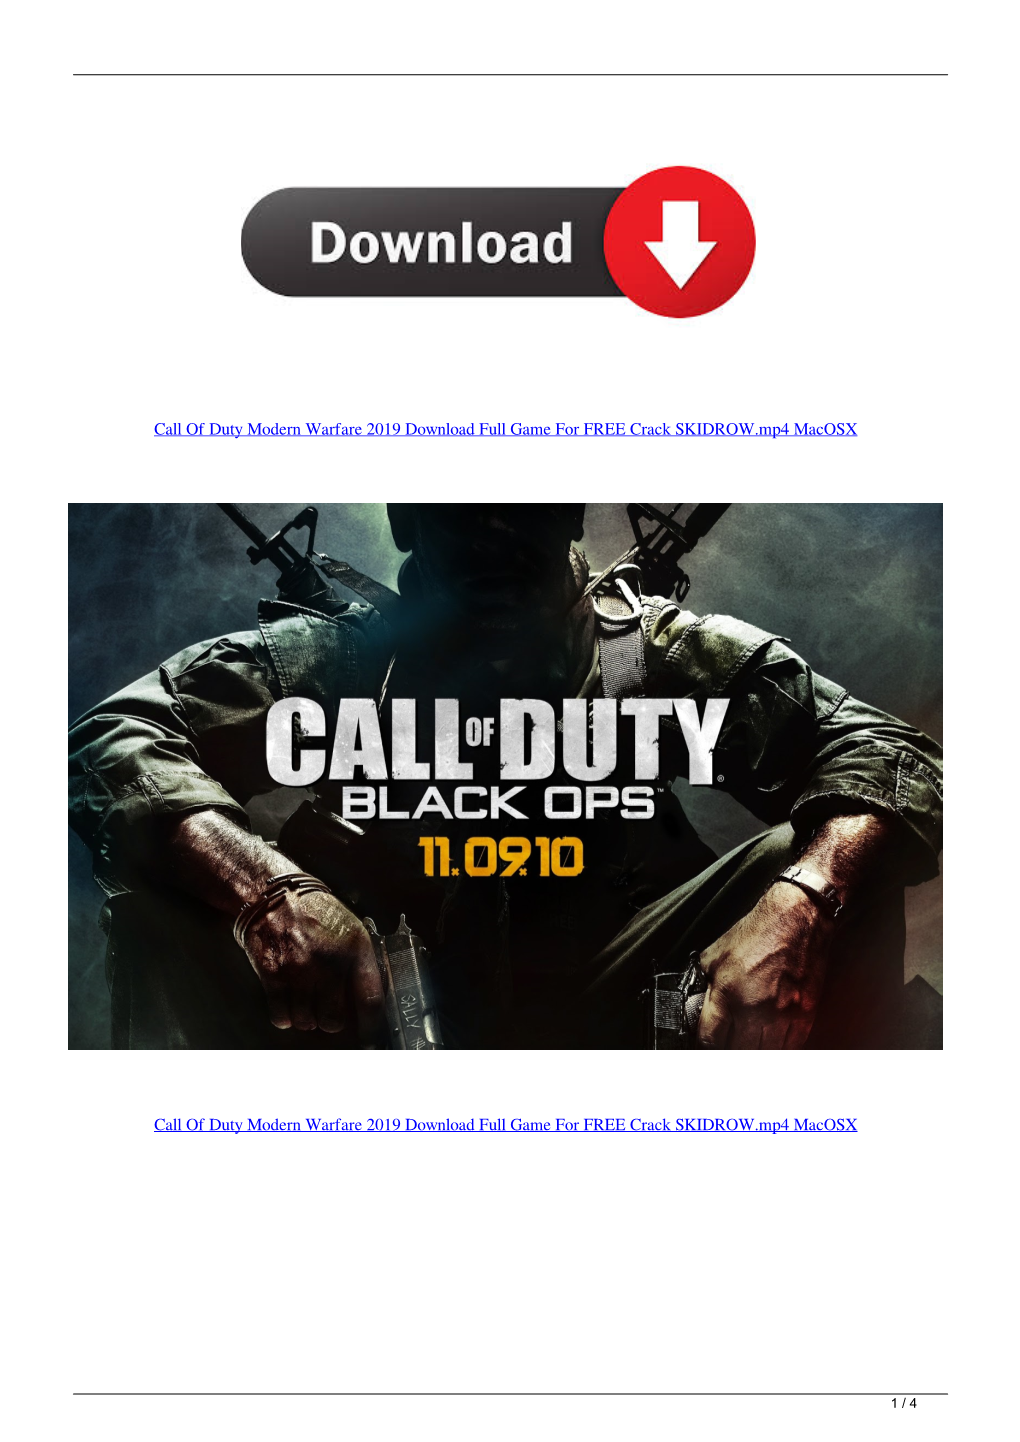 Call of Duty Modern Warfare 2019 Download Full Game for FREE Crack Skidrowmp4 Macosx